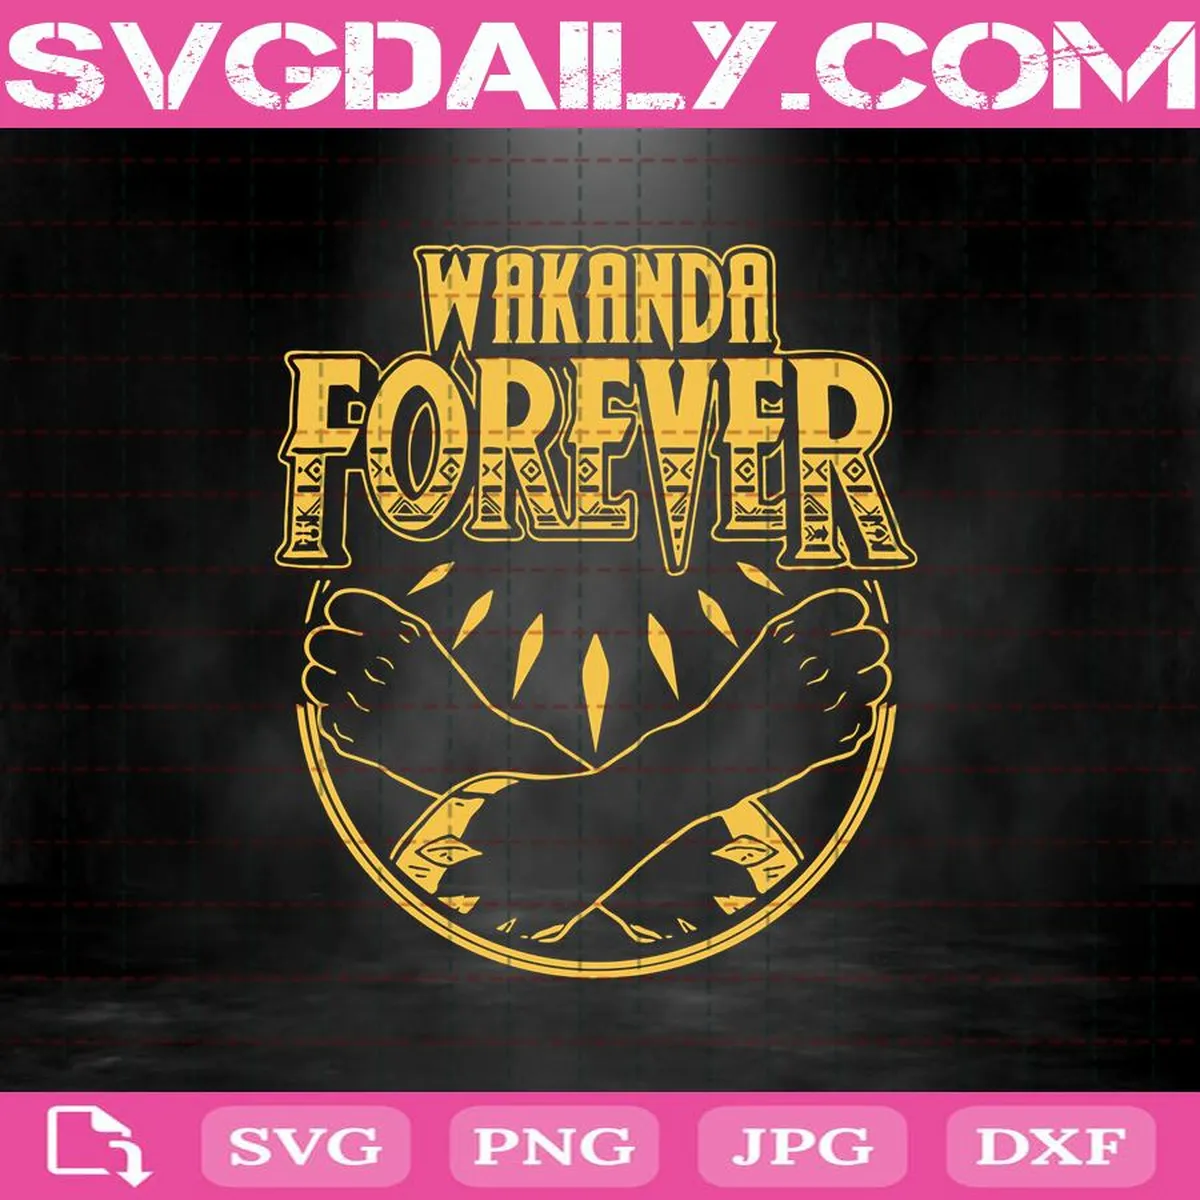 Wakanda Forever Svg, Black Panther Svg, RIP Chadwick Boseman Svg, Black Hero Svg, Svg Files, Cutting Files, Silhouette